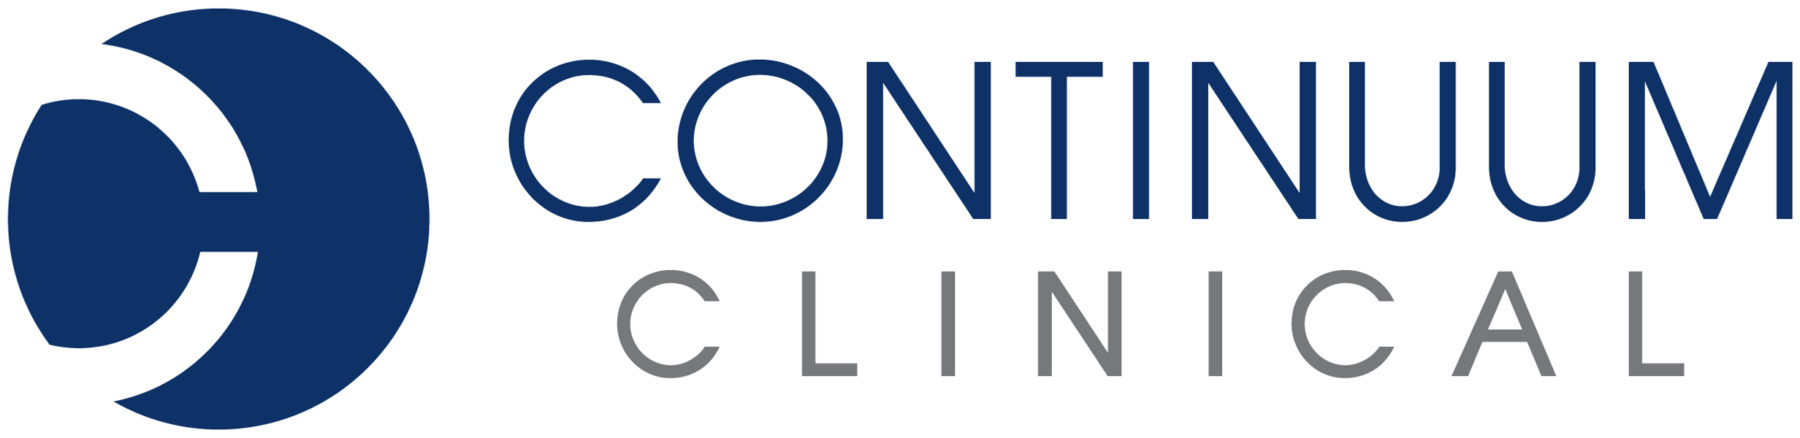 Continuum Clinical_Logo